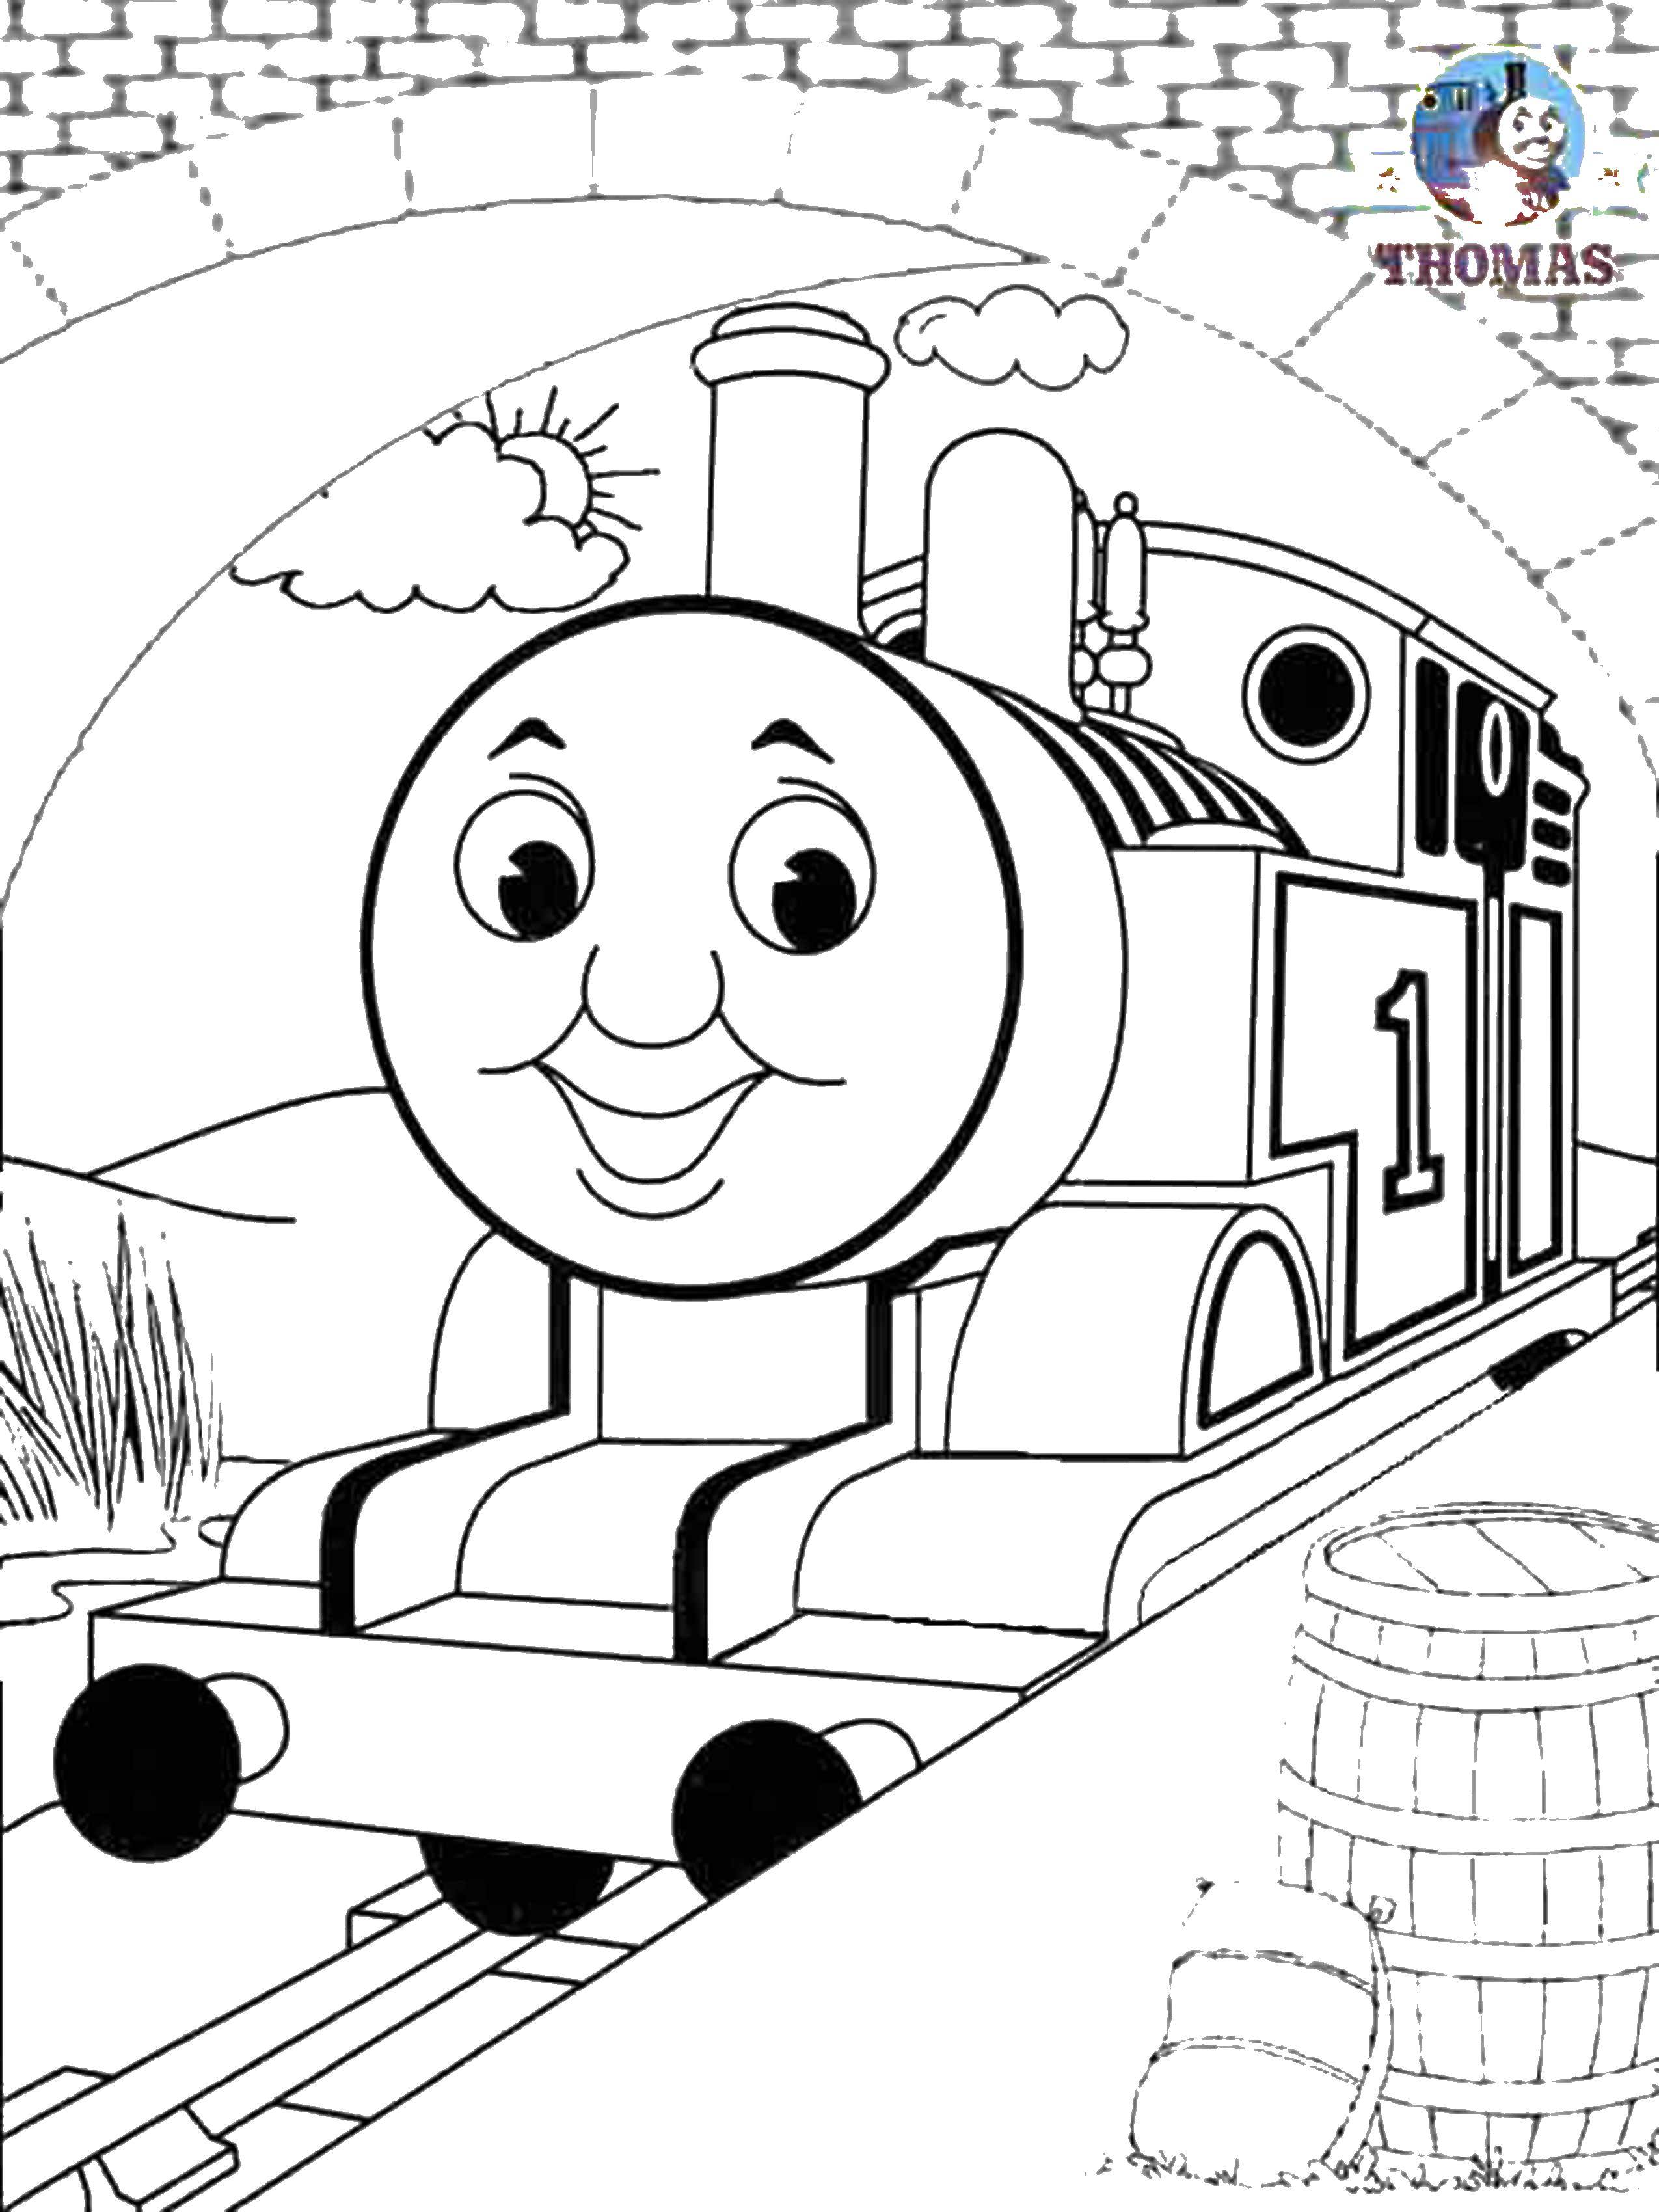 Coloring Thomas the tank engine. Category train. Tags:  locomotive, Thomas.